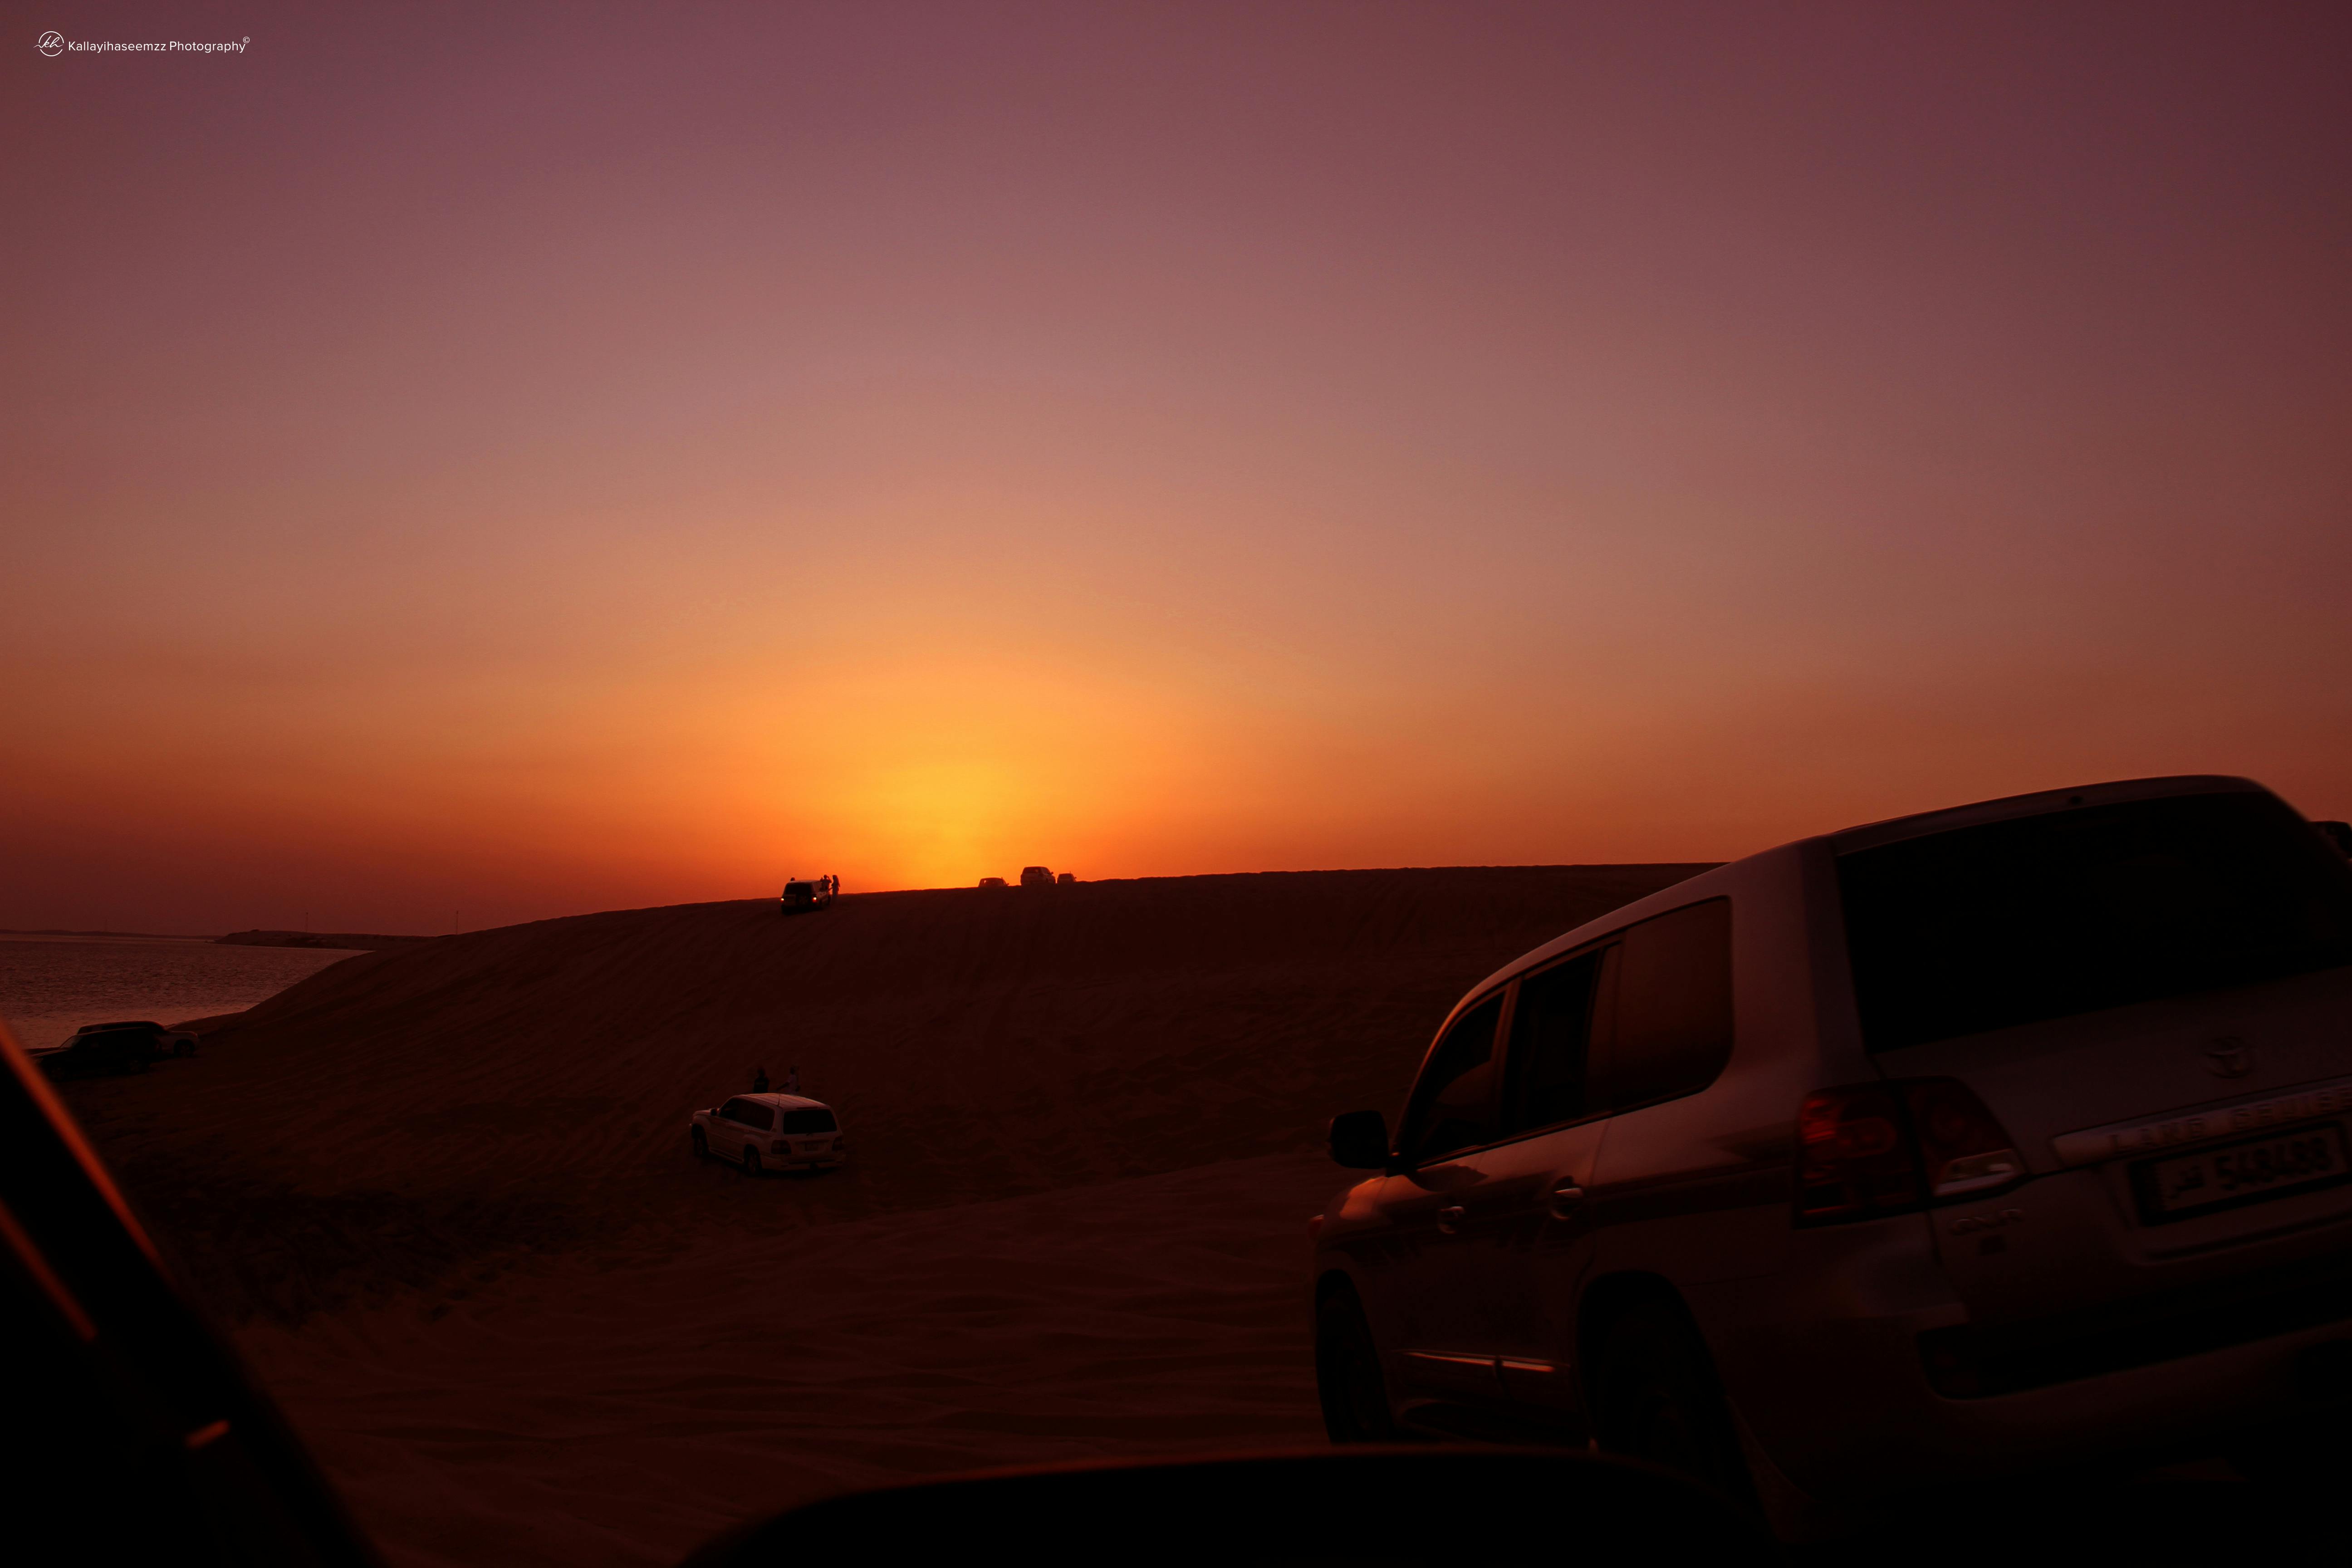 Free stock photo of sunset sunset sunrise photography #pexels desert #desert #sand #dunes good evening #good evening